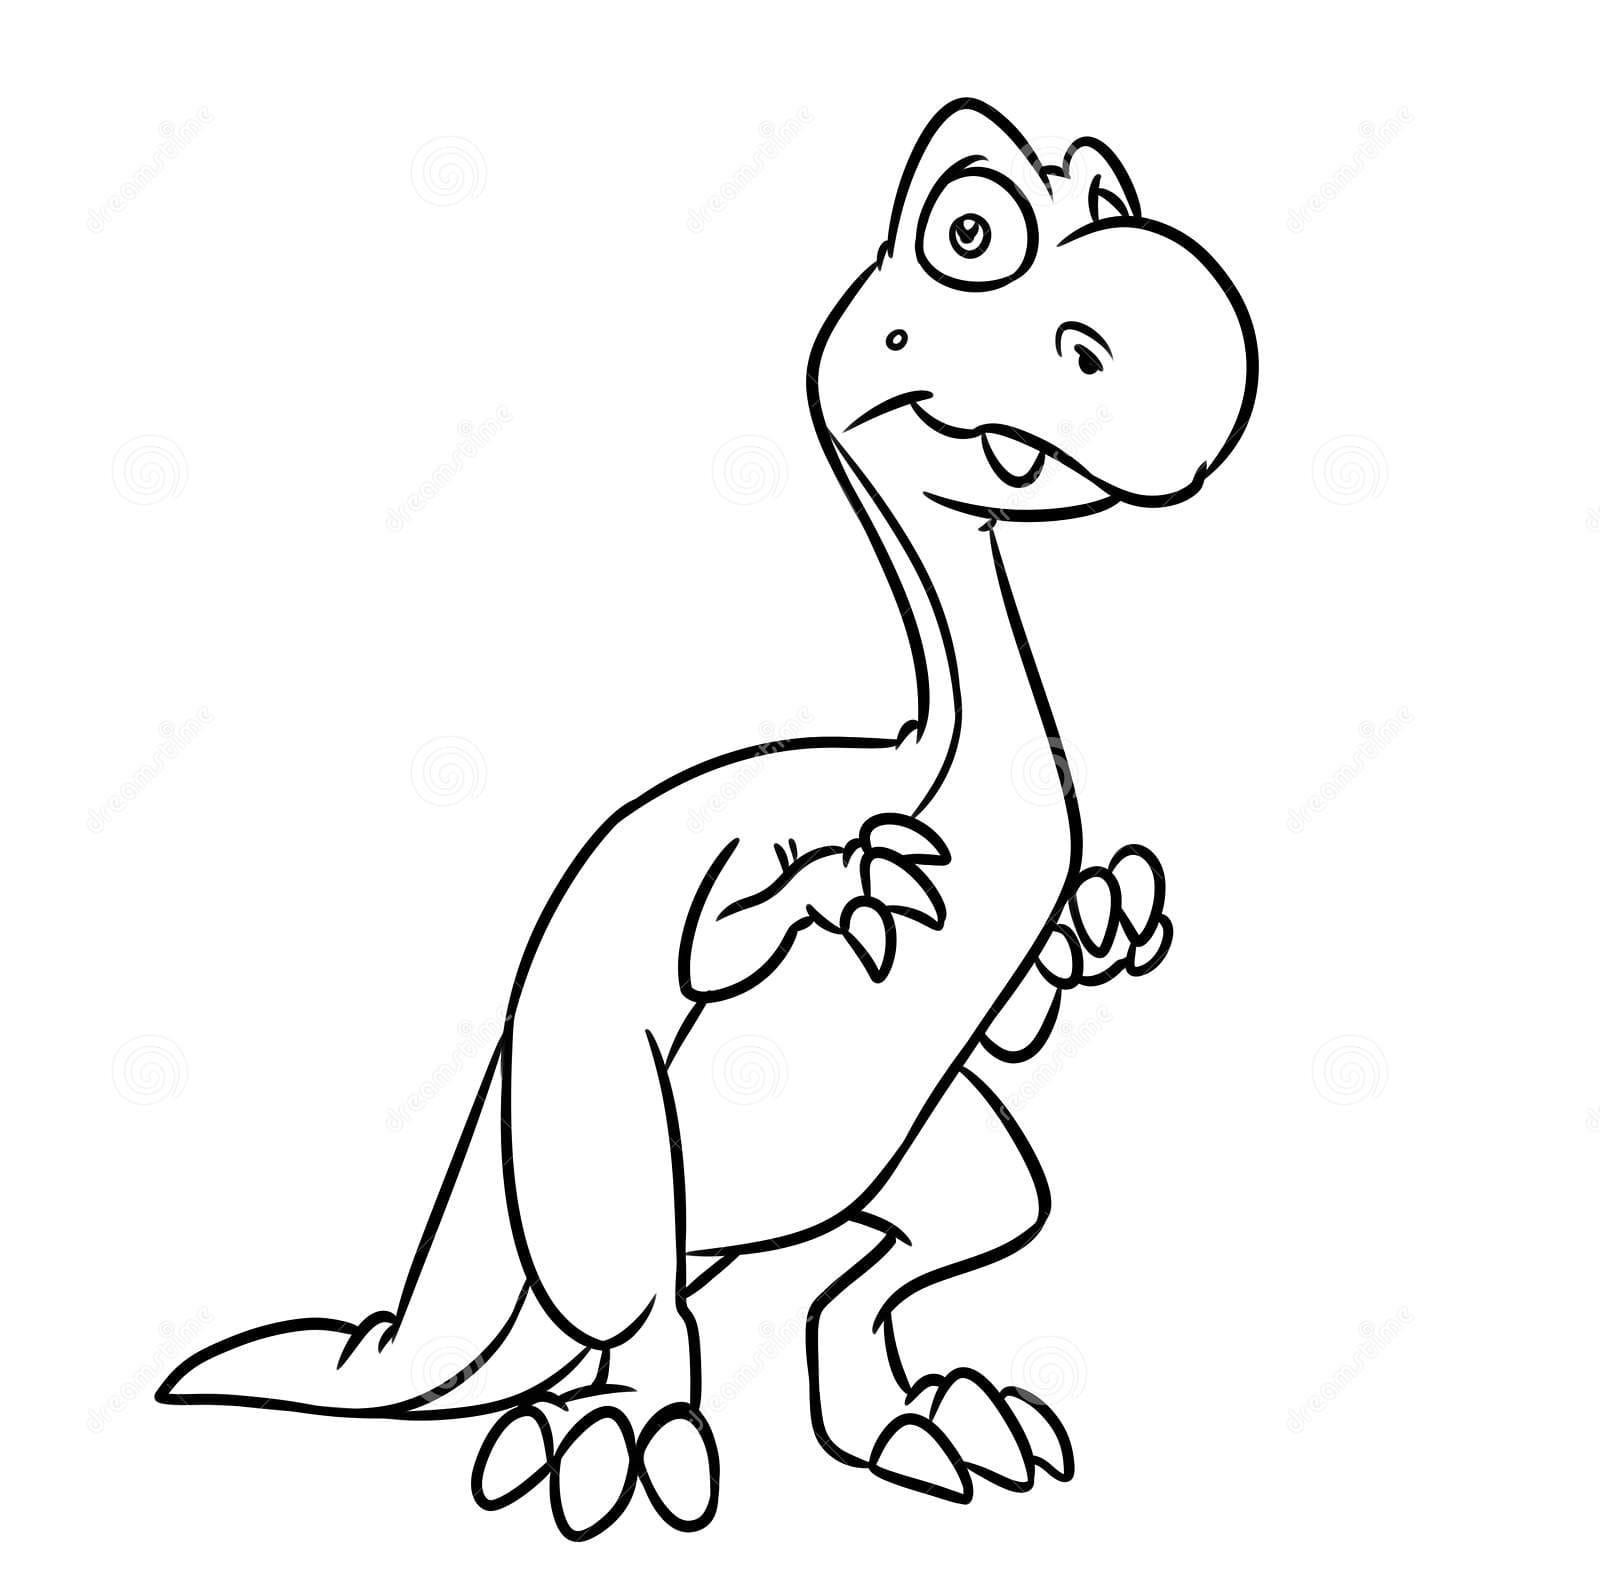 Predatory Raptor cartoon